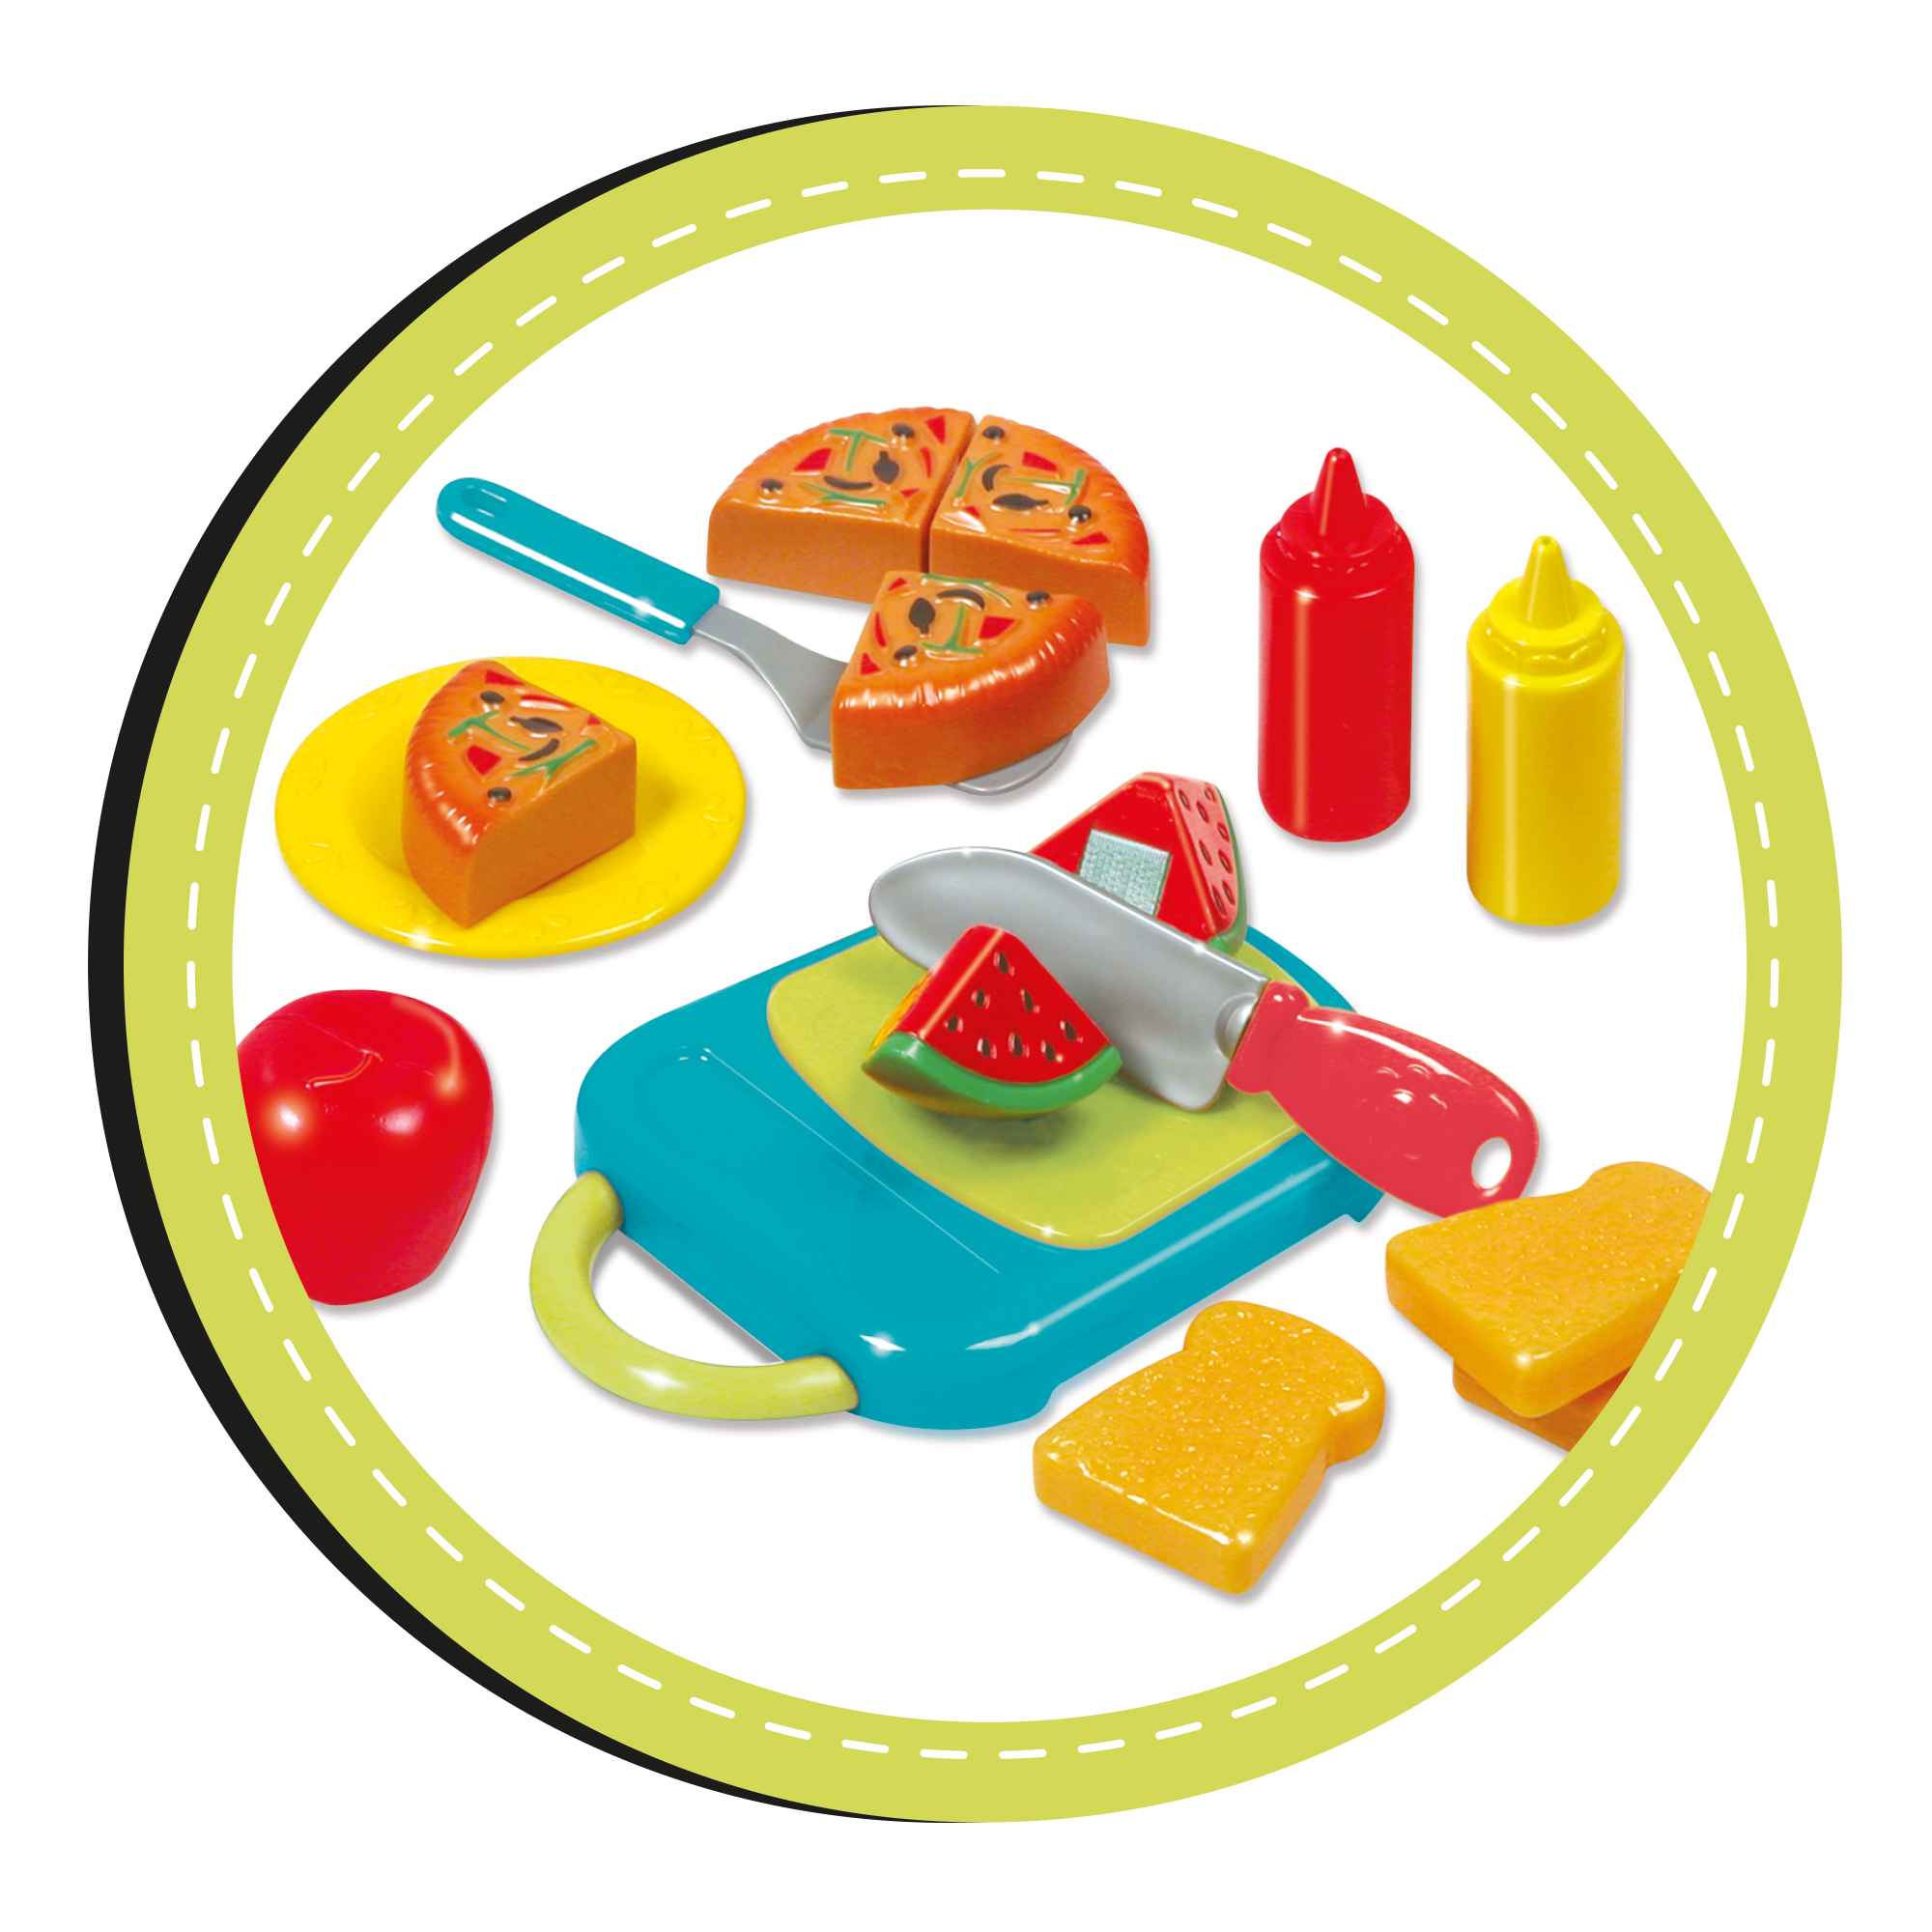 Funny Home Παιδικό Σετ για Προετοιμασία Φαγητού 4 Σχέδια PRG00730 - Funny Home